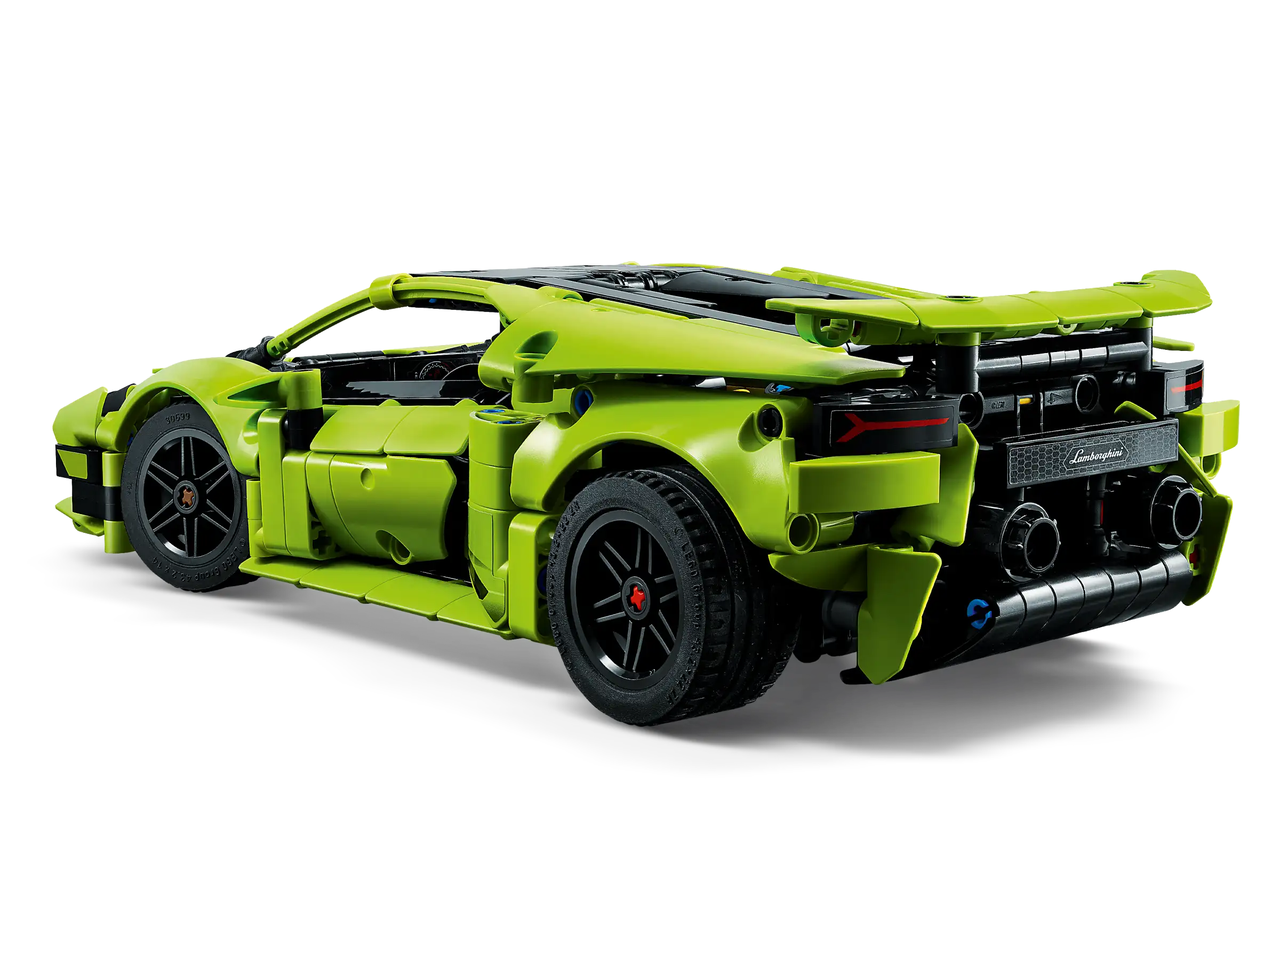 Lamborghini Huracan Tecnica LEGO Technic